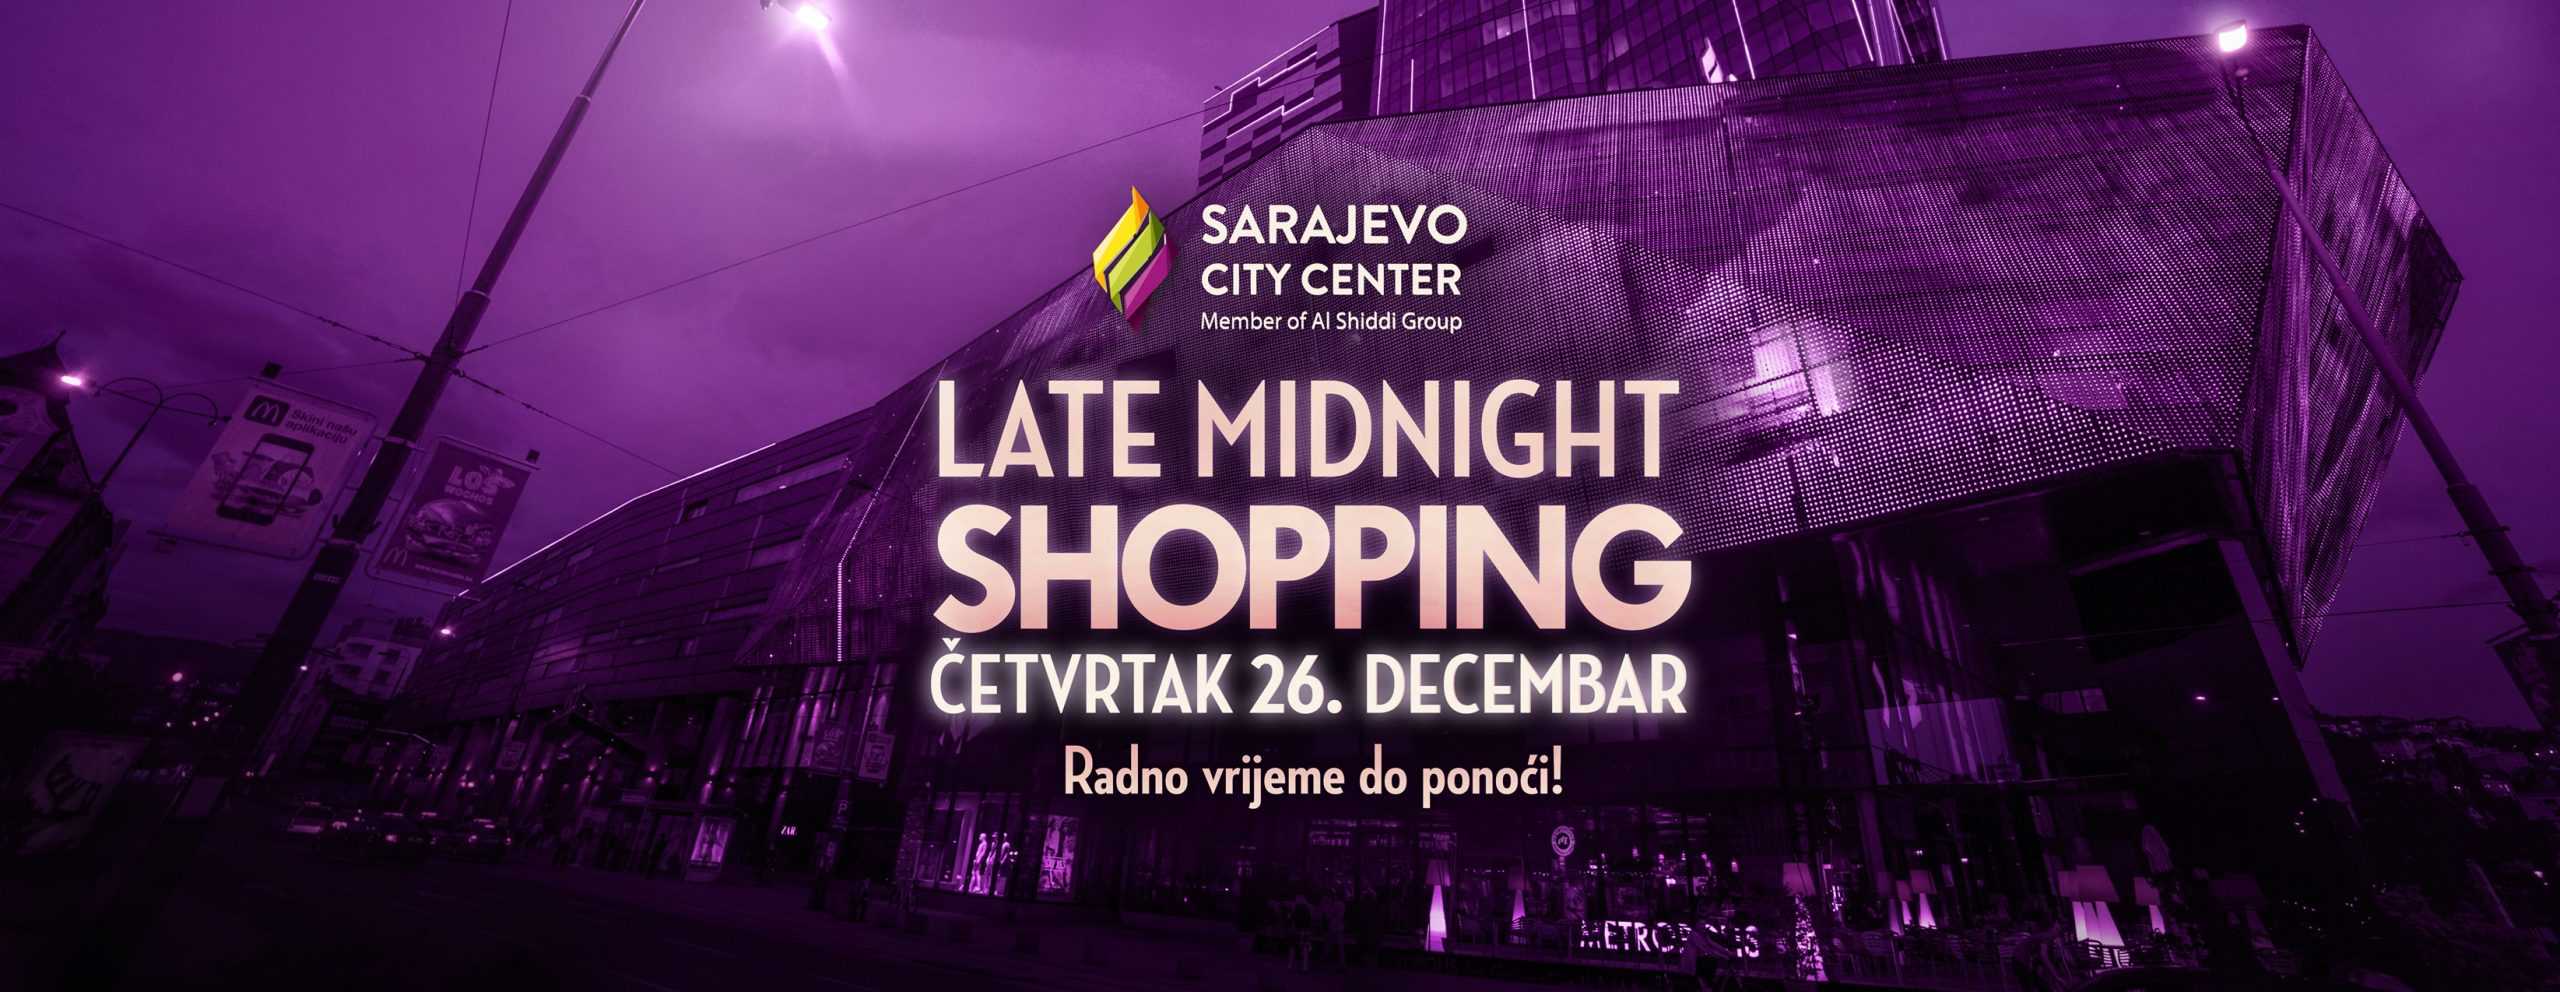 SCC Late Midnight shopping sarajevo city center shopping night u scc-u.